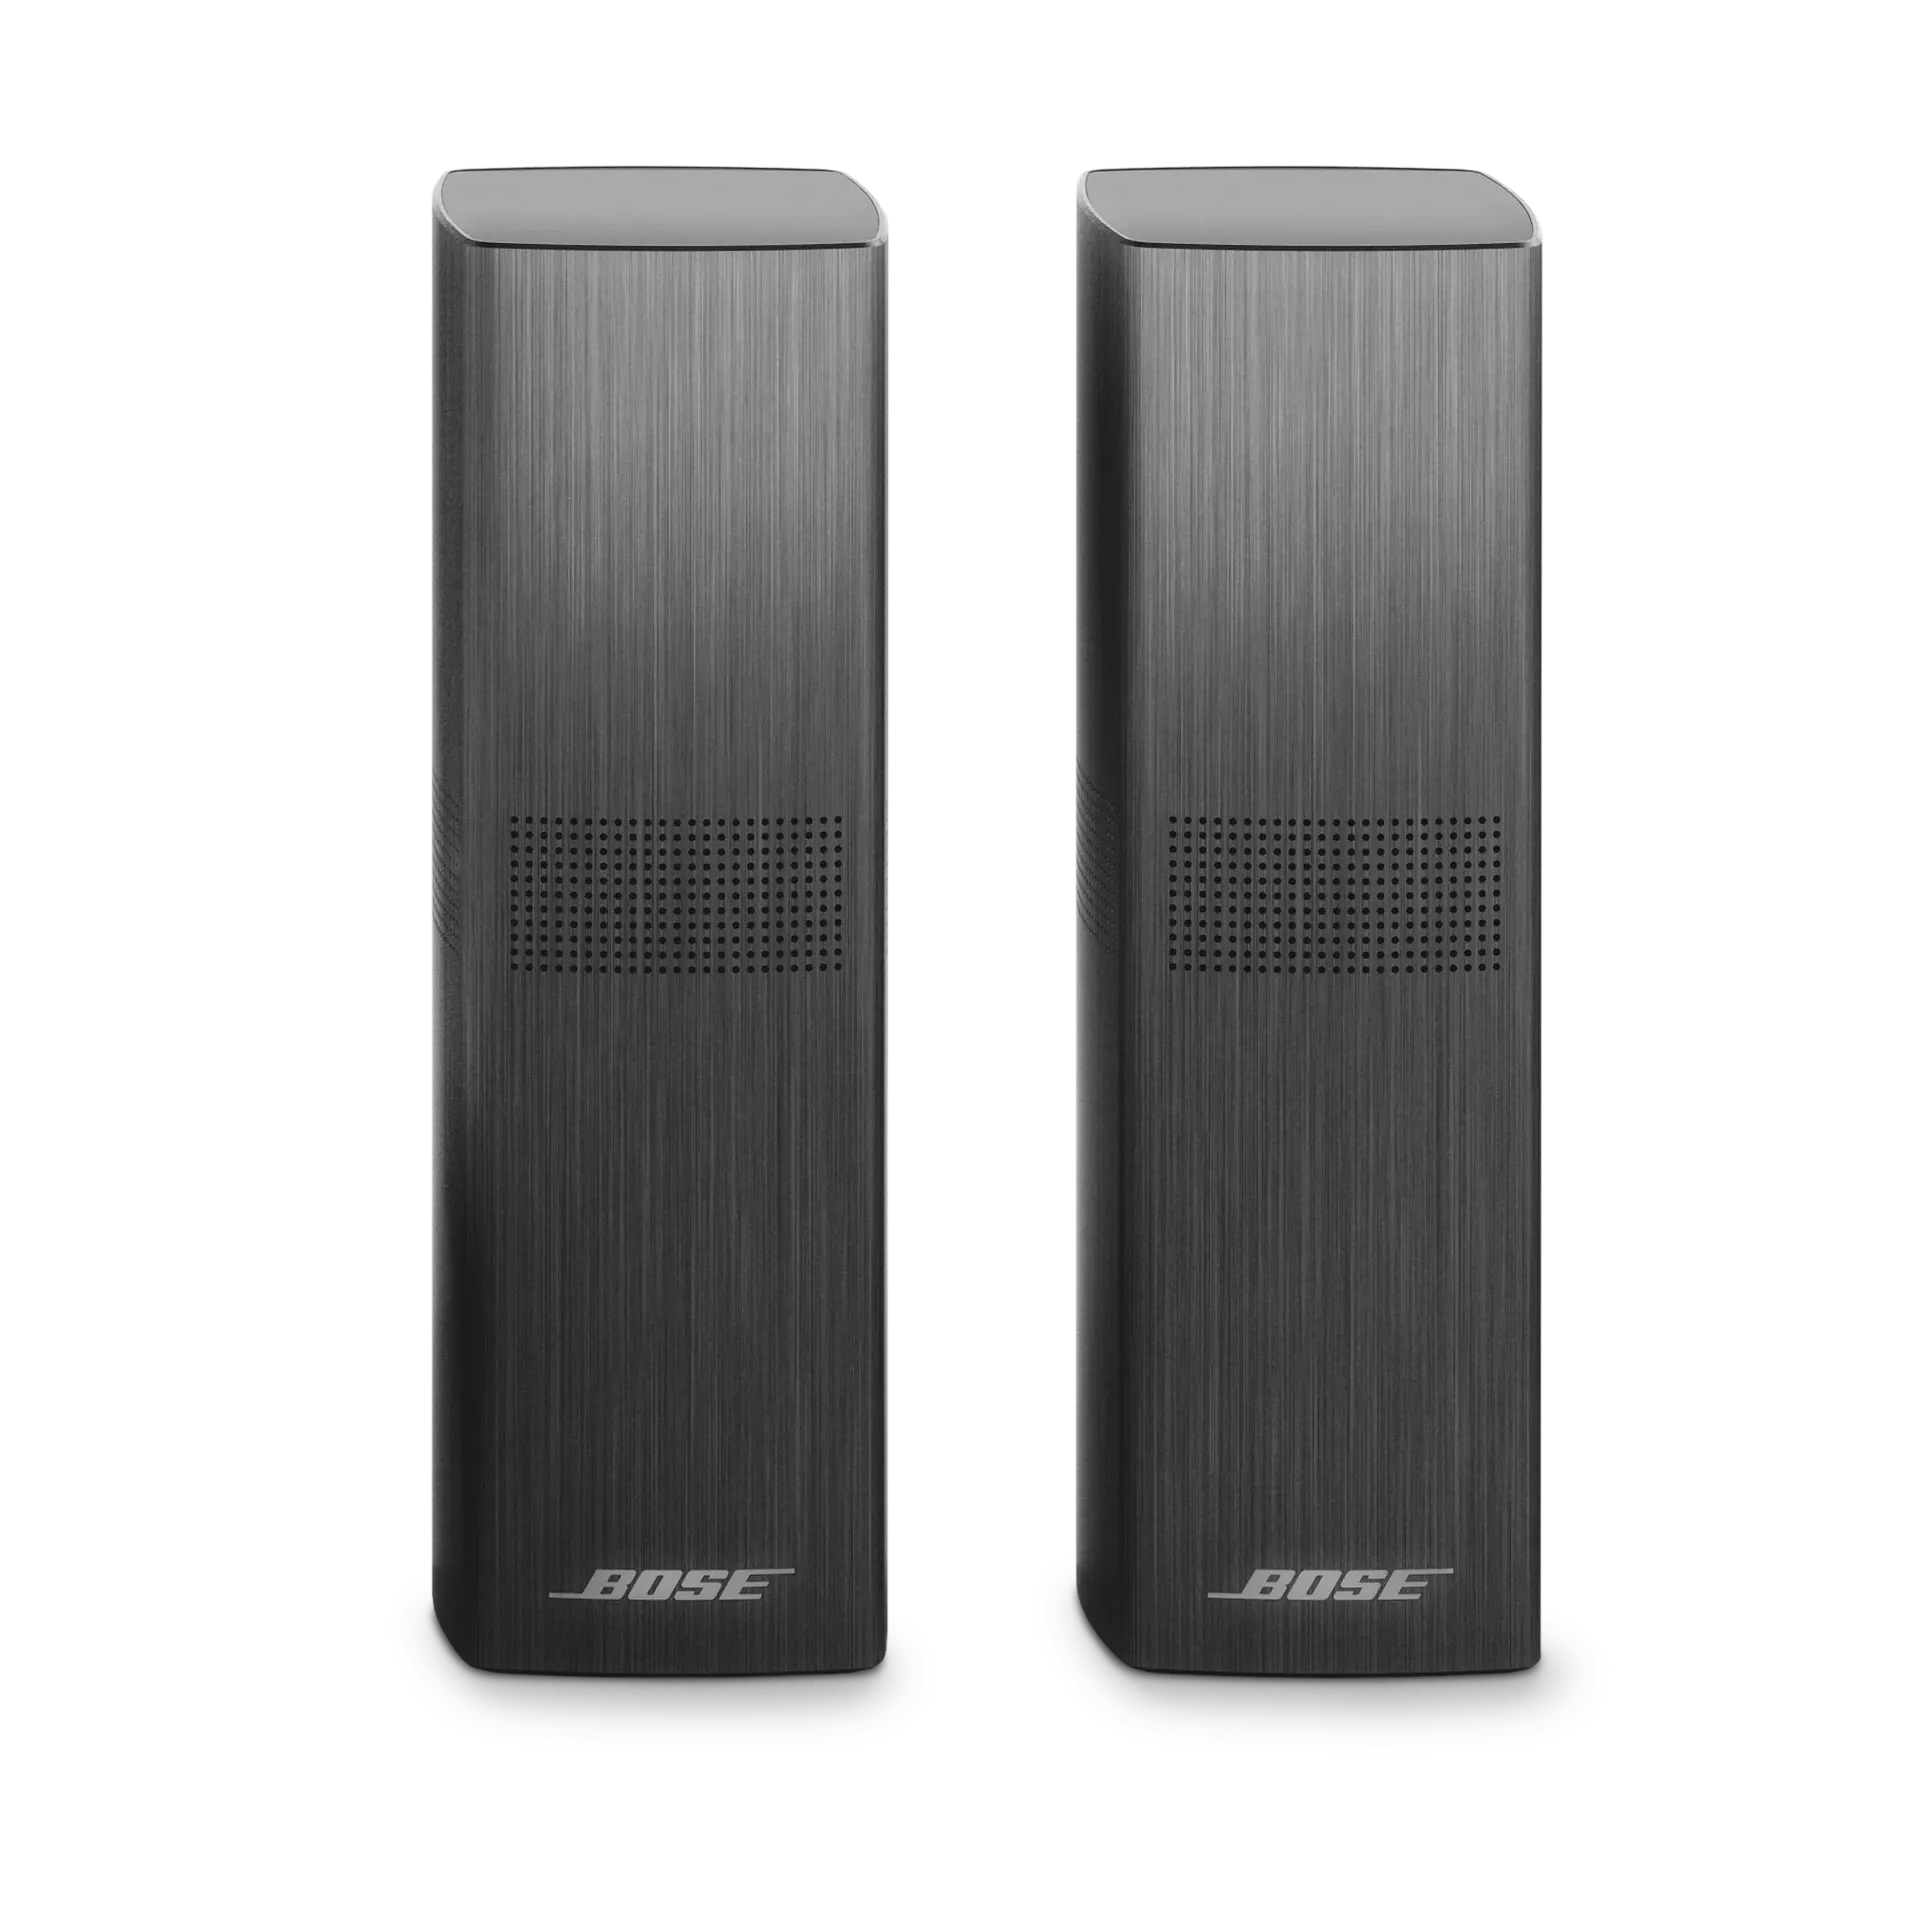 Bose Surround Speakers Speakers Wireless 700 Surround | – Bose